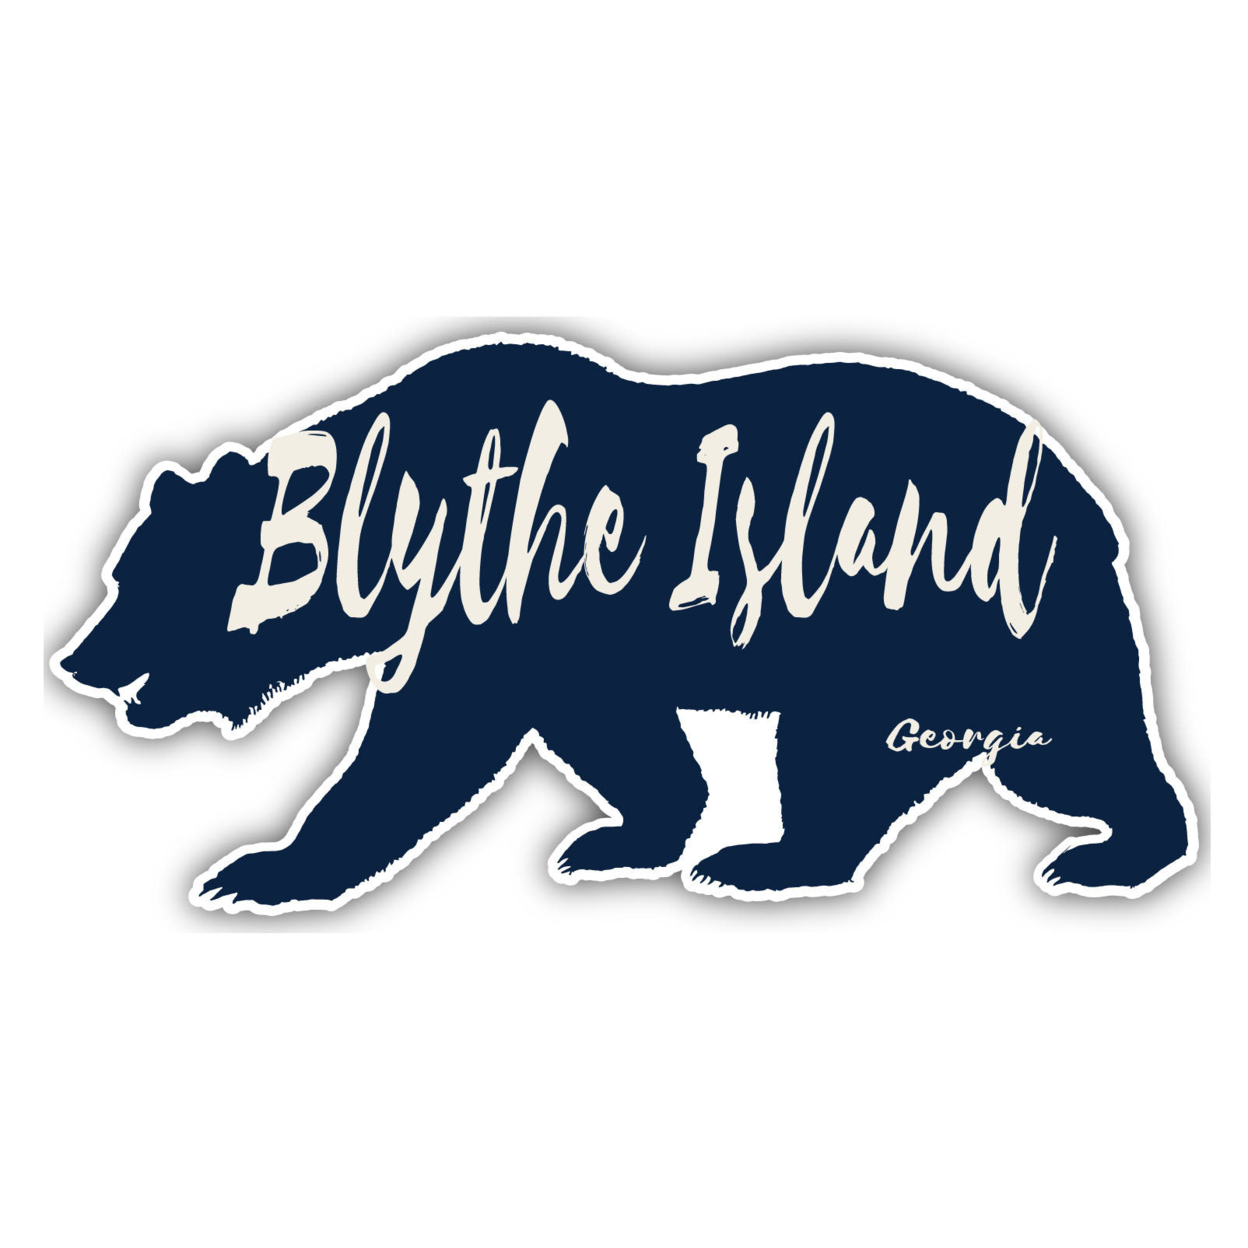 Blythe Island Georgia Souvenir Decorative Stickers (Choose Theme And Size) - 4-Pack, 12-Inch, Camp Life